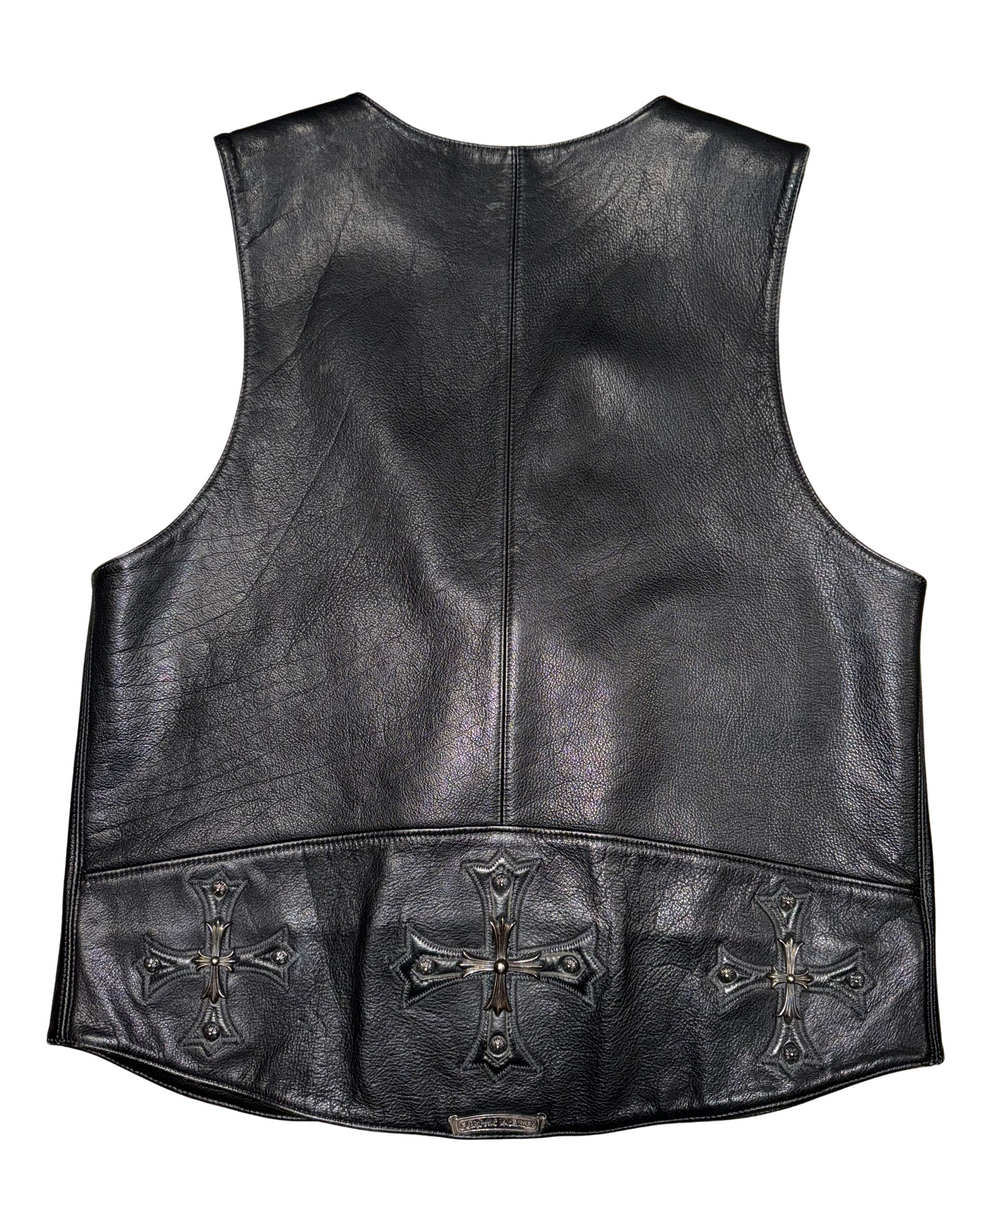 Chrome Hearts 'Black' Leather Cross Patch Biker Vest